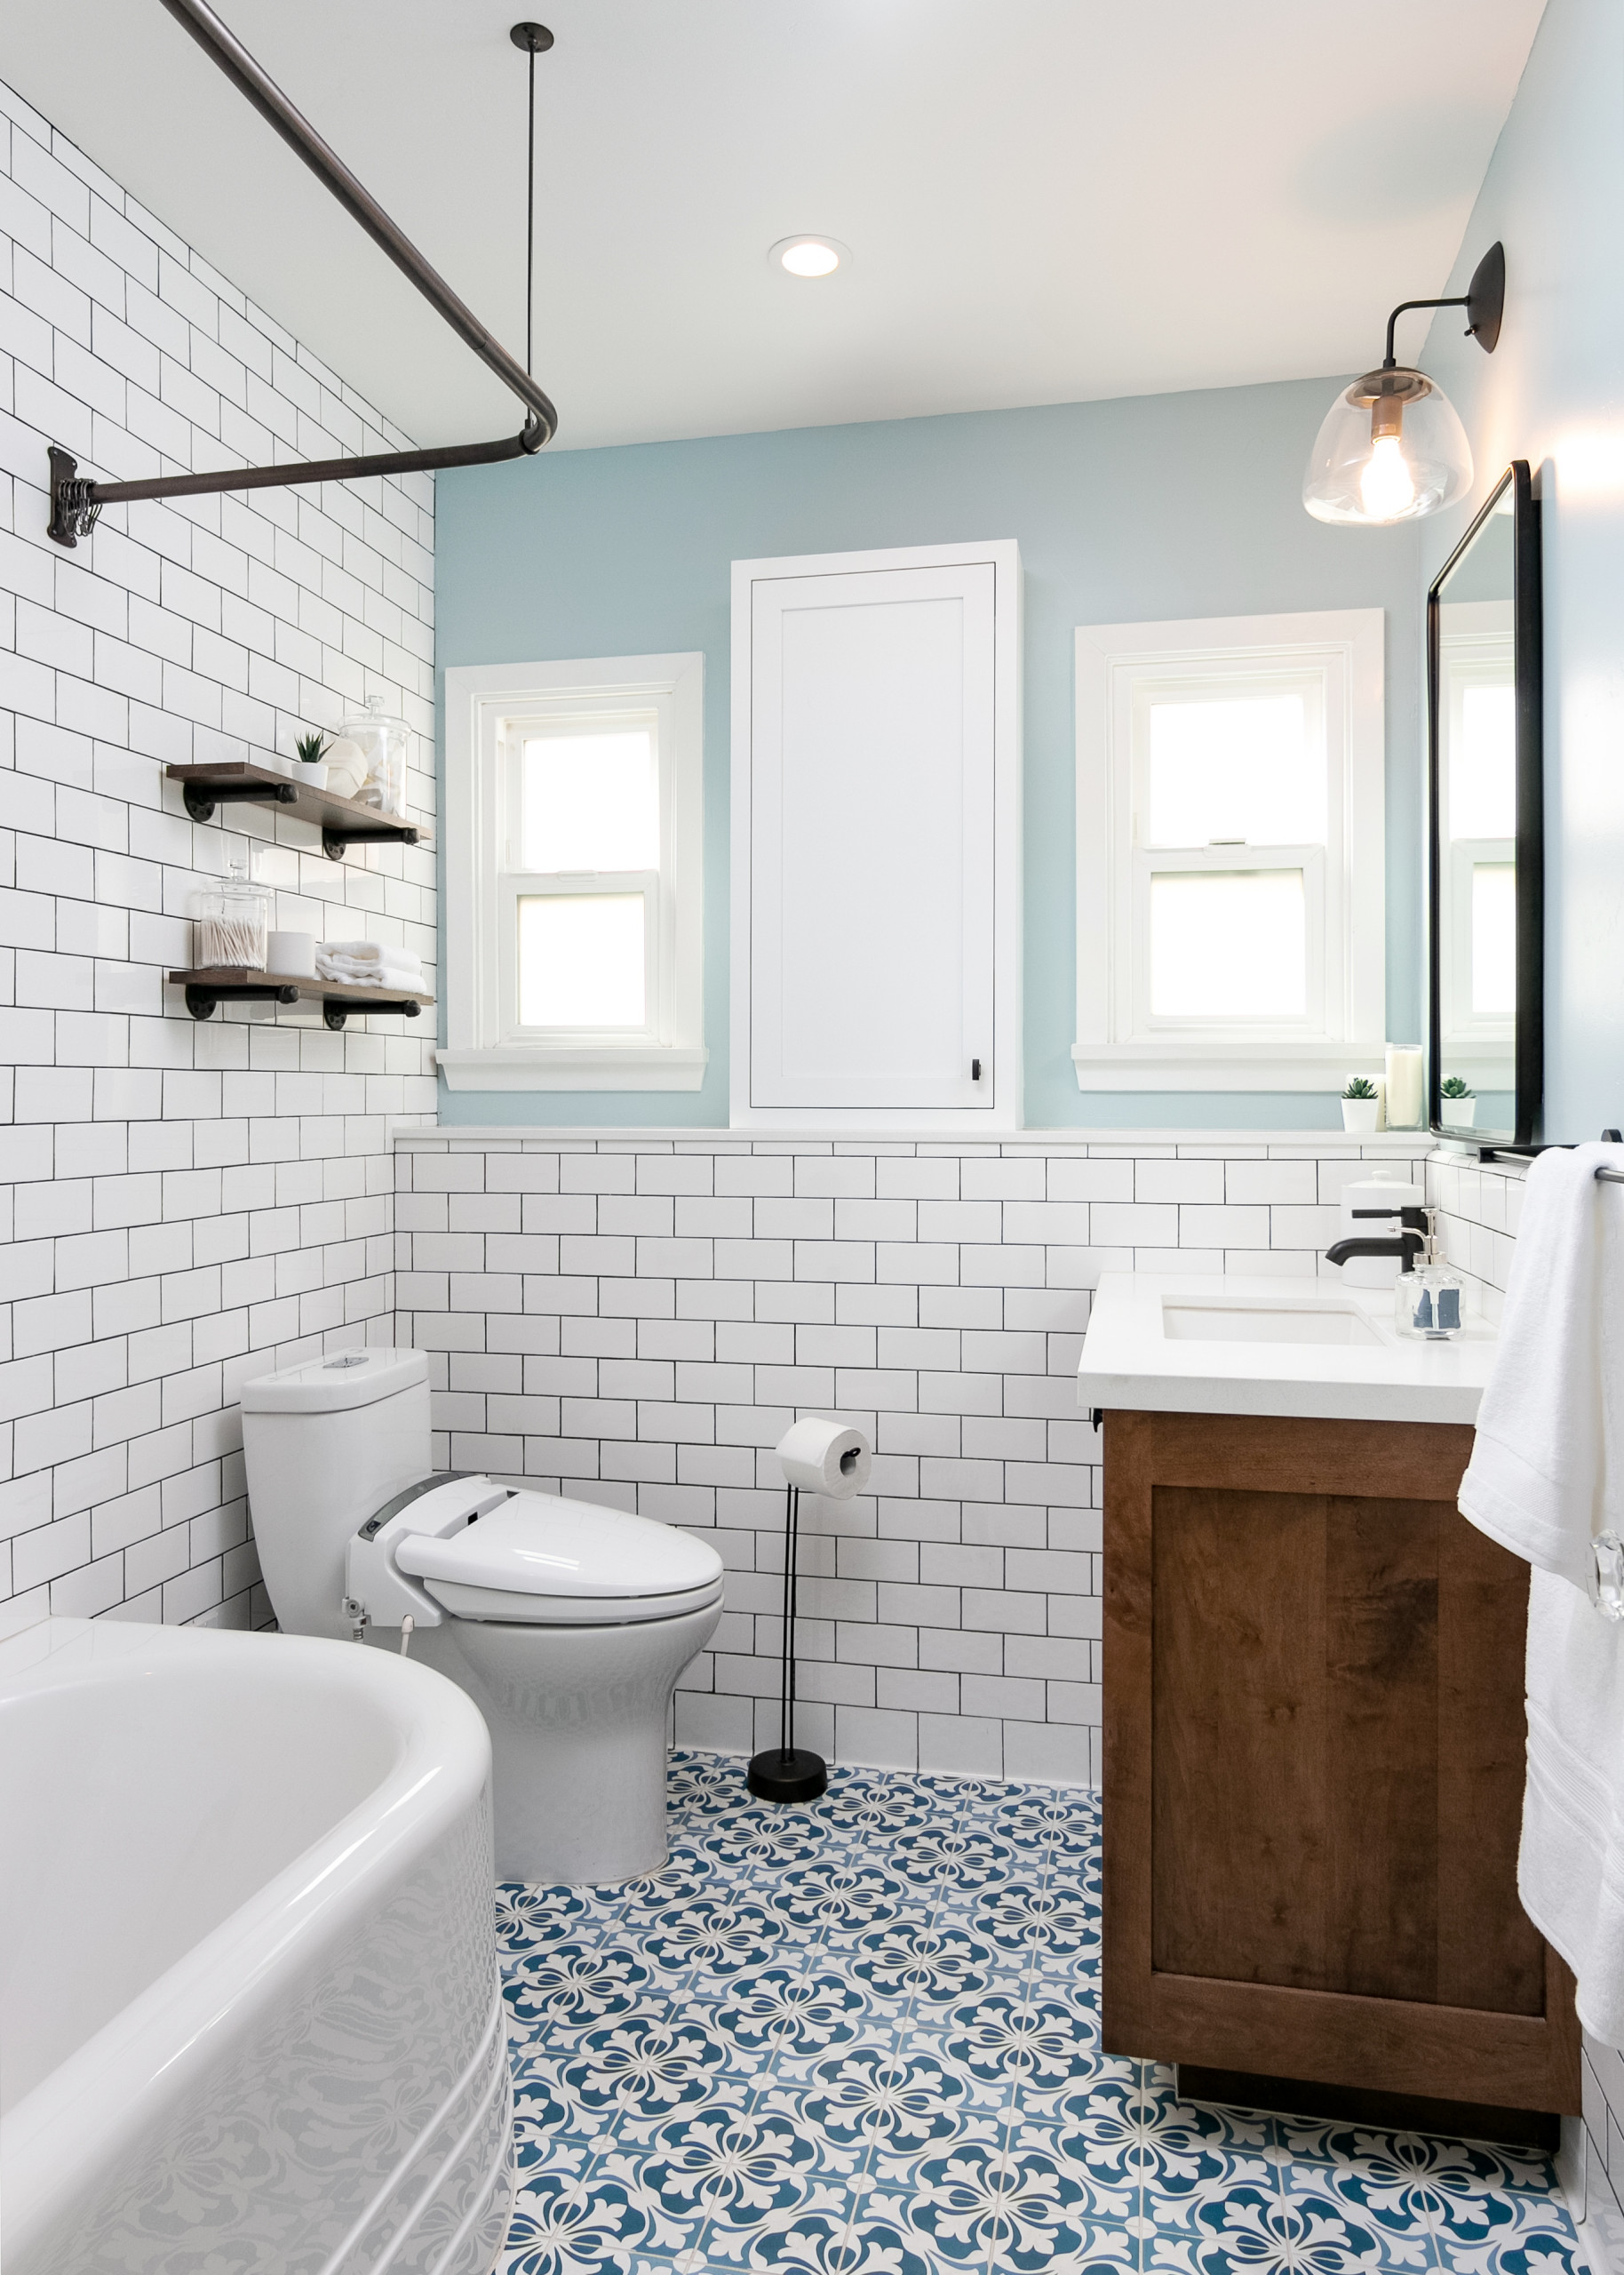 Modern Blue Vanity  Blue bathroom tile, Blue white bathrooms, Blue  bathroom vanity